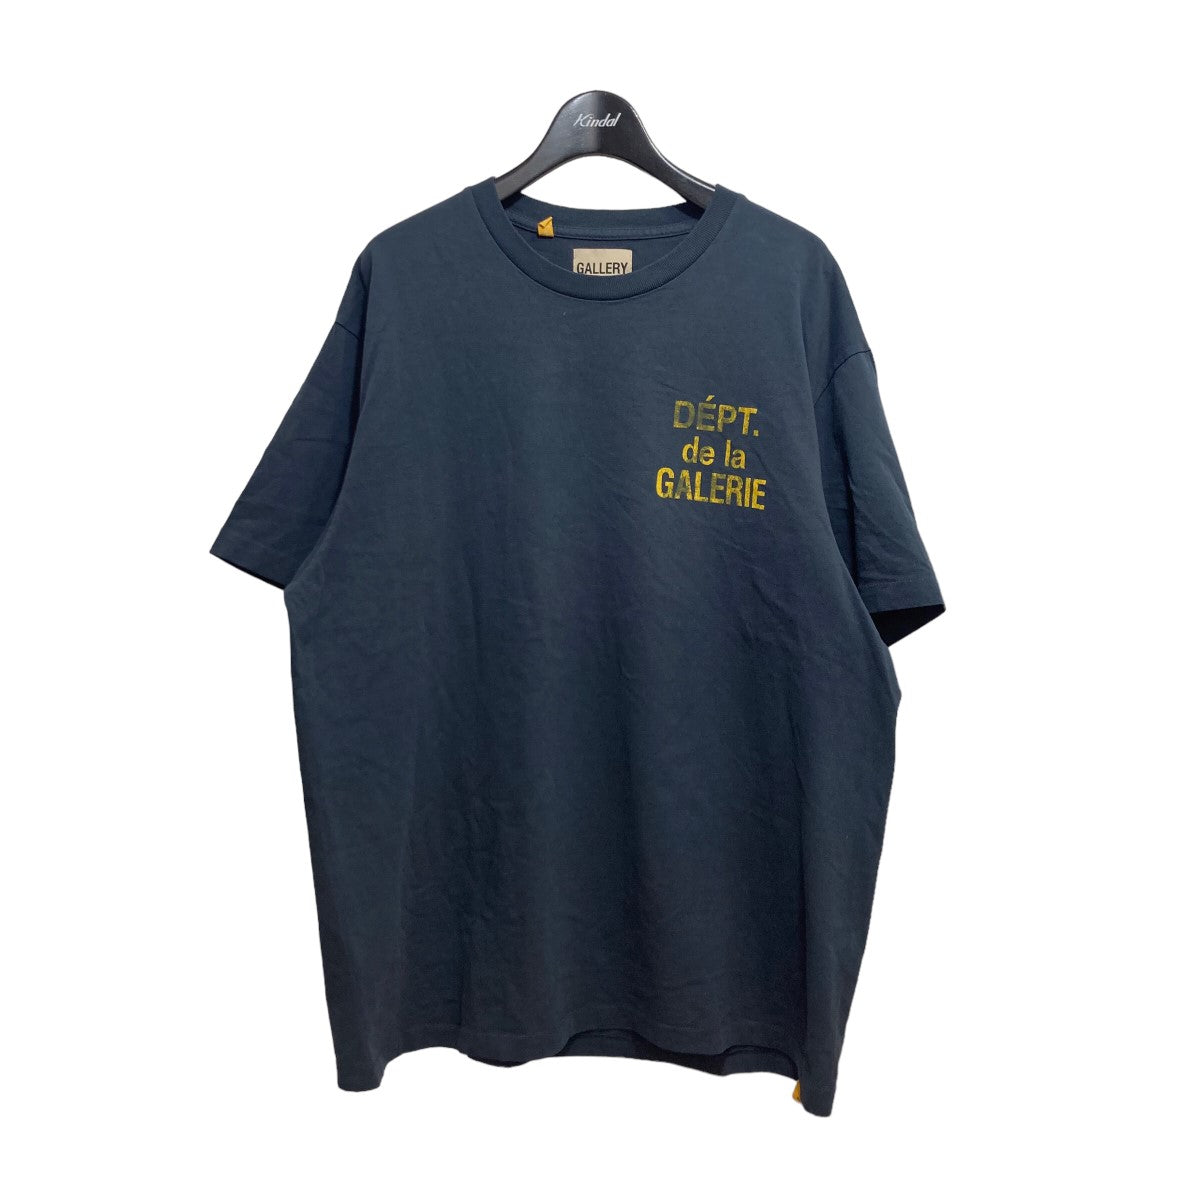 GALLERY DEPT(ギャラリーデプト) French T-ShirtクルーネックTシャツ ...